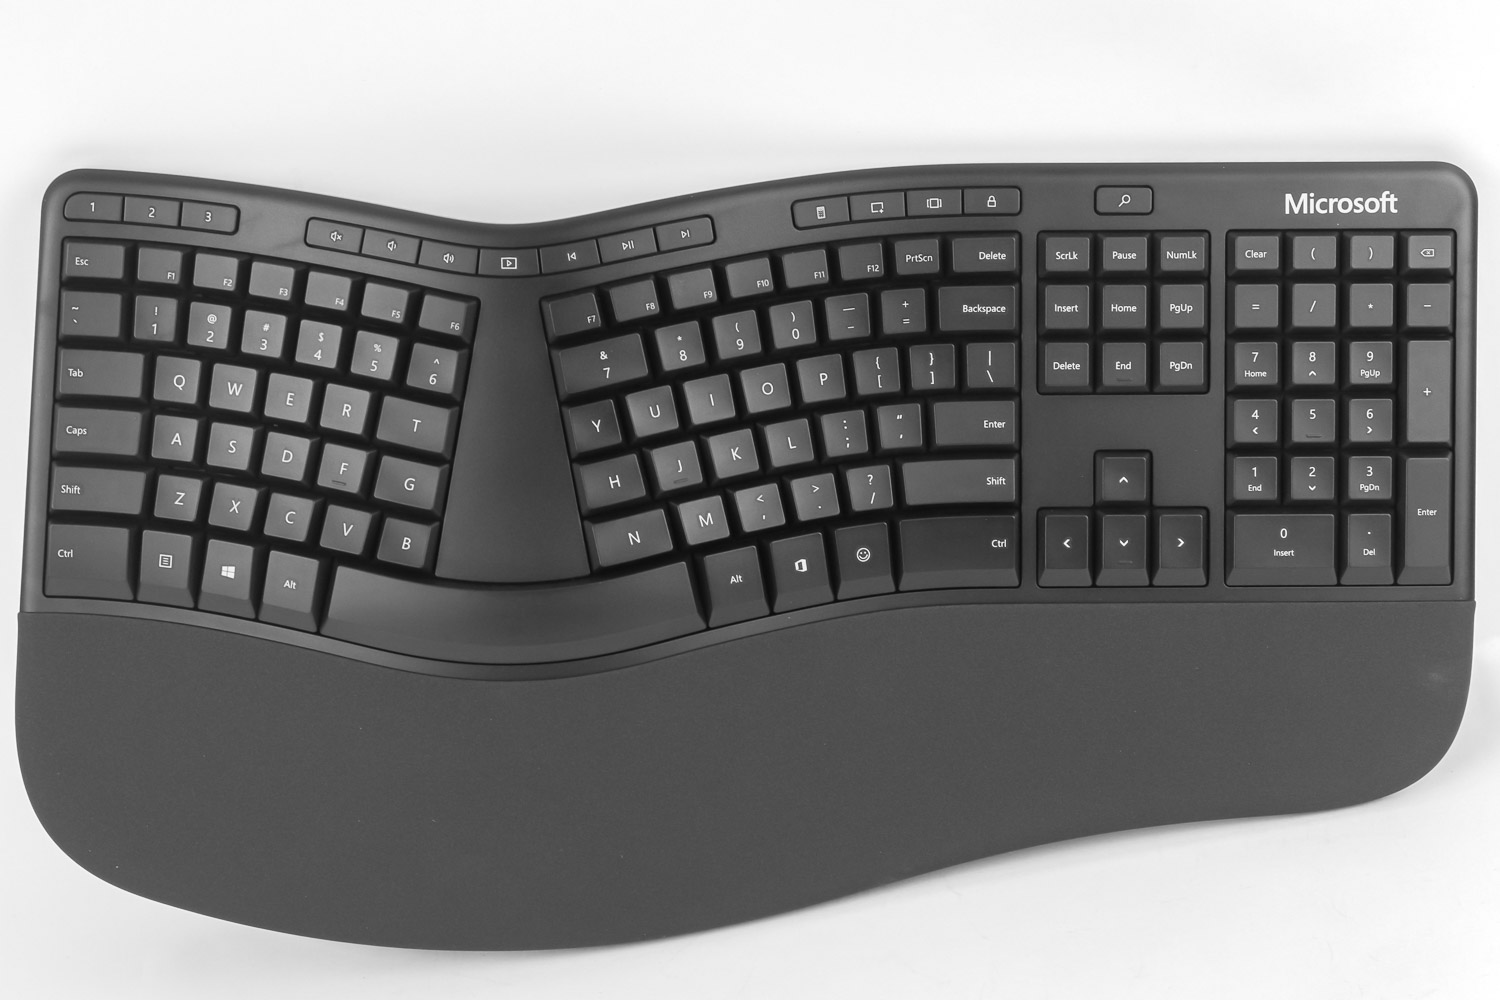 Logitech Wireless Keyboard K350 review: This ergonomic keyboard